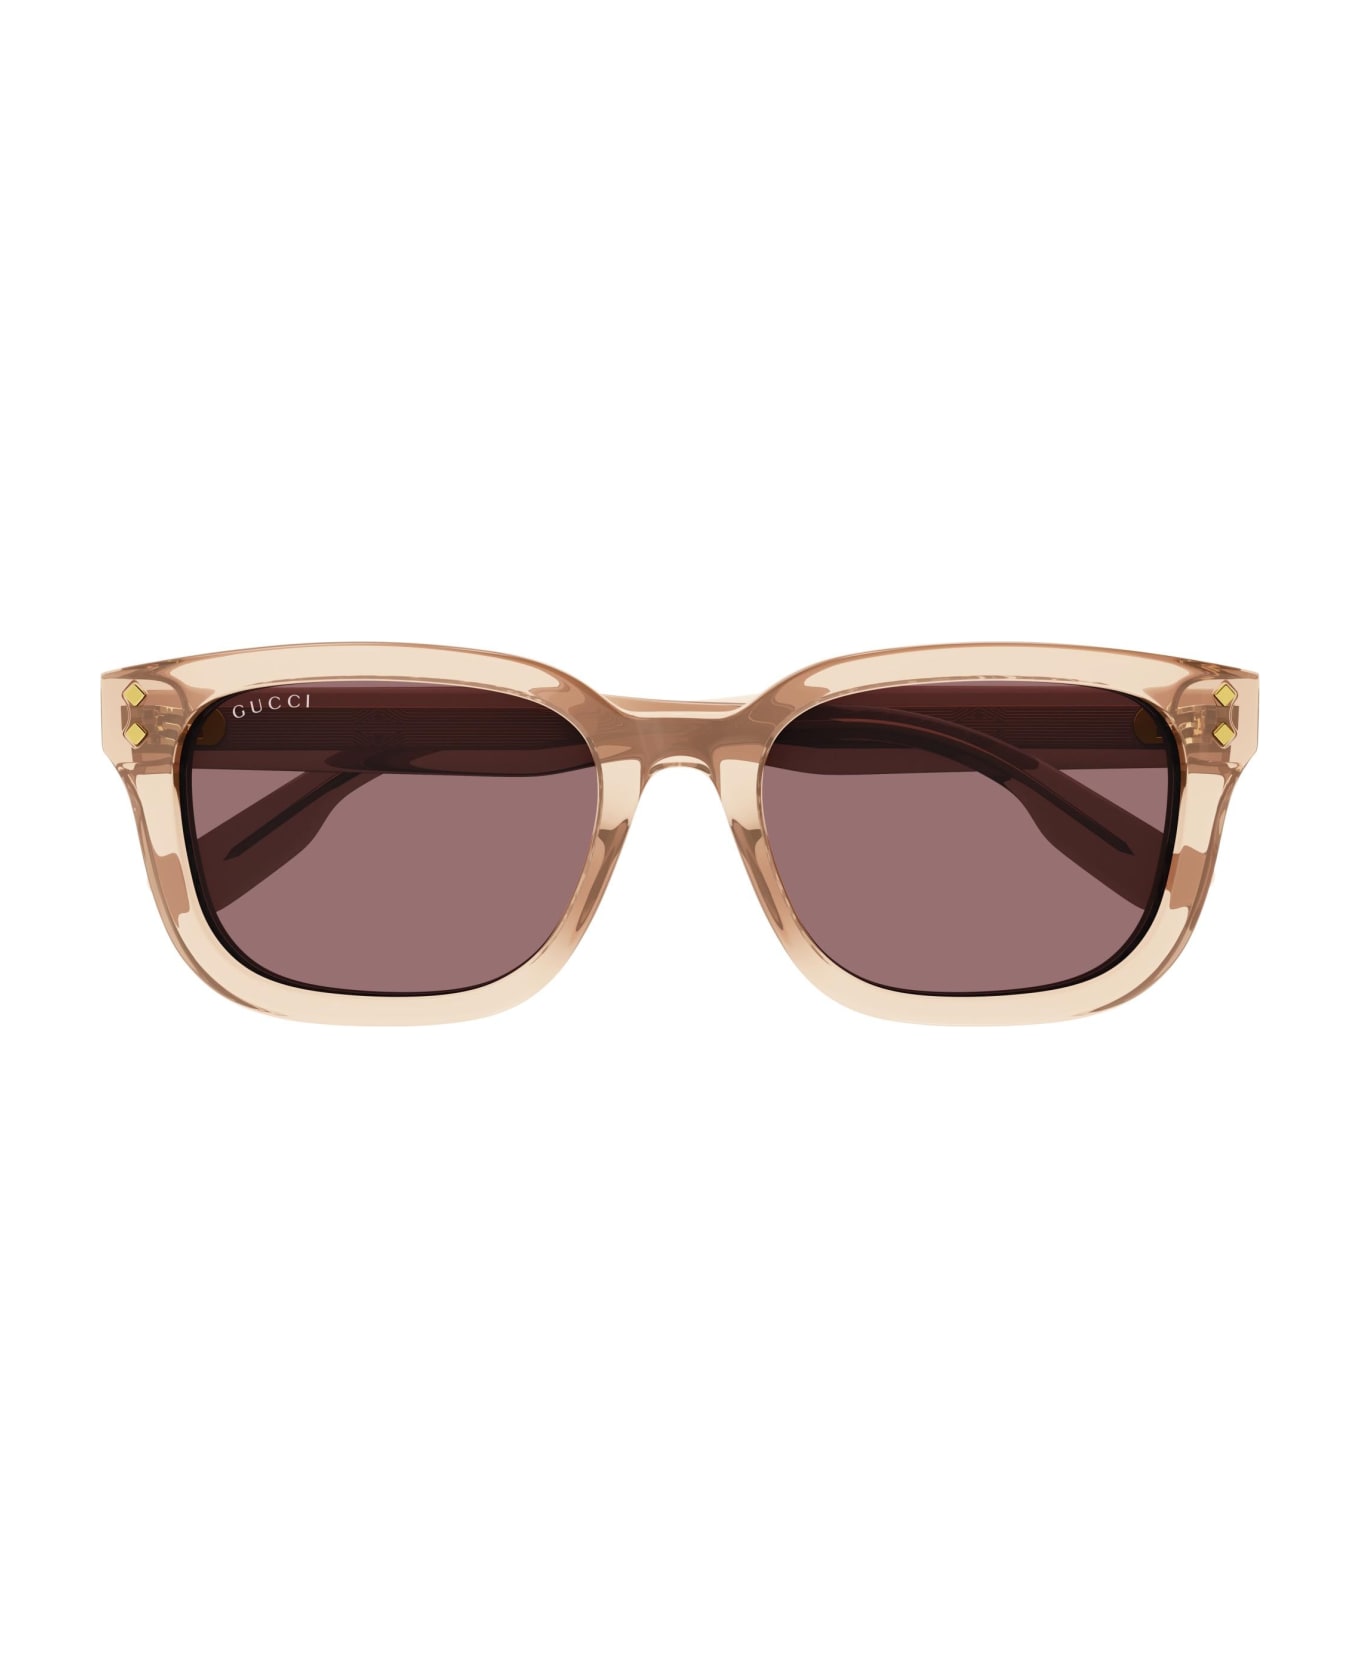 Gucci Eyewear Sunglasses - Arancione/Rosso サングラス